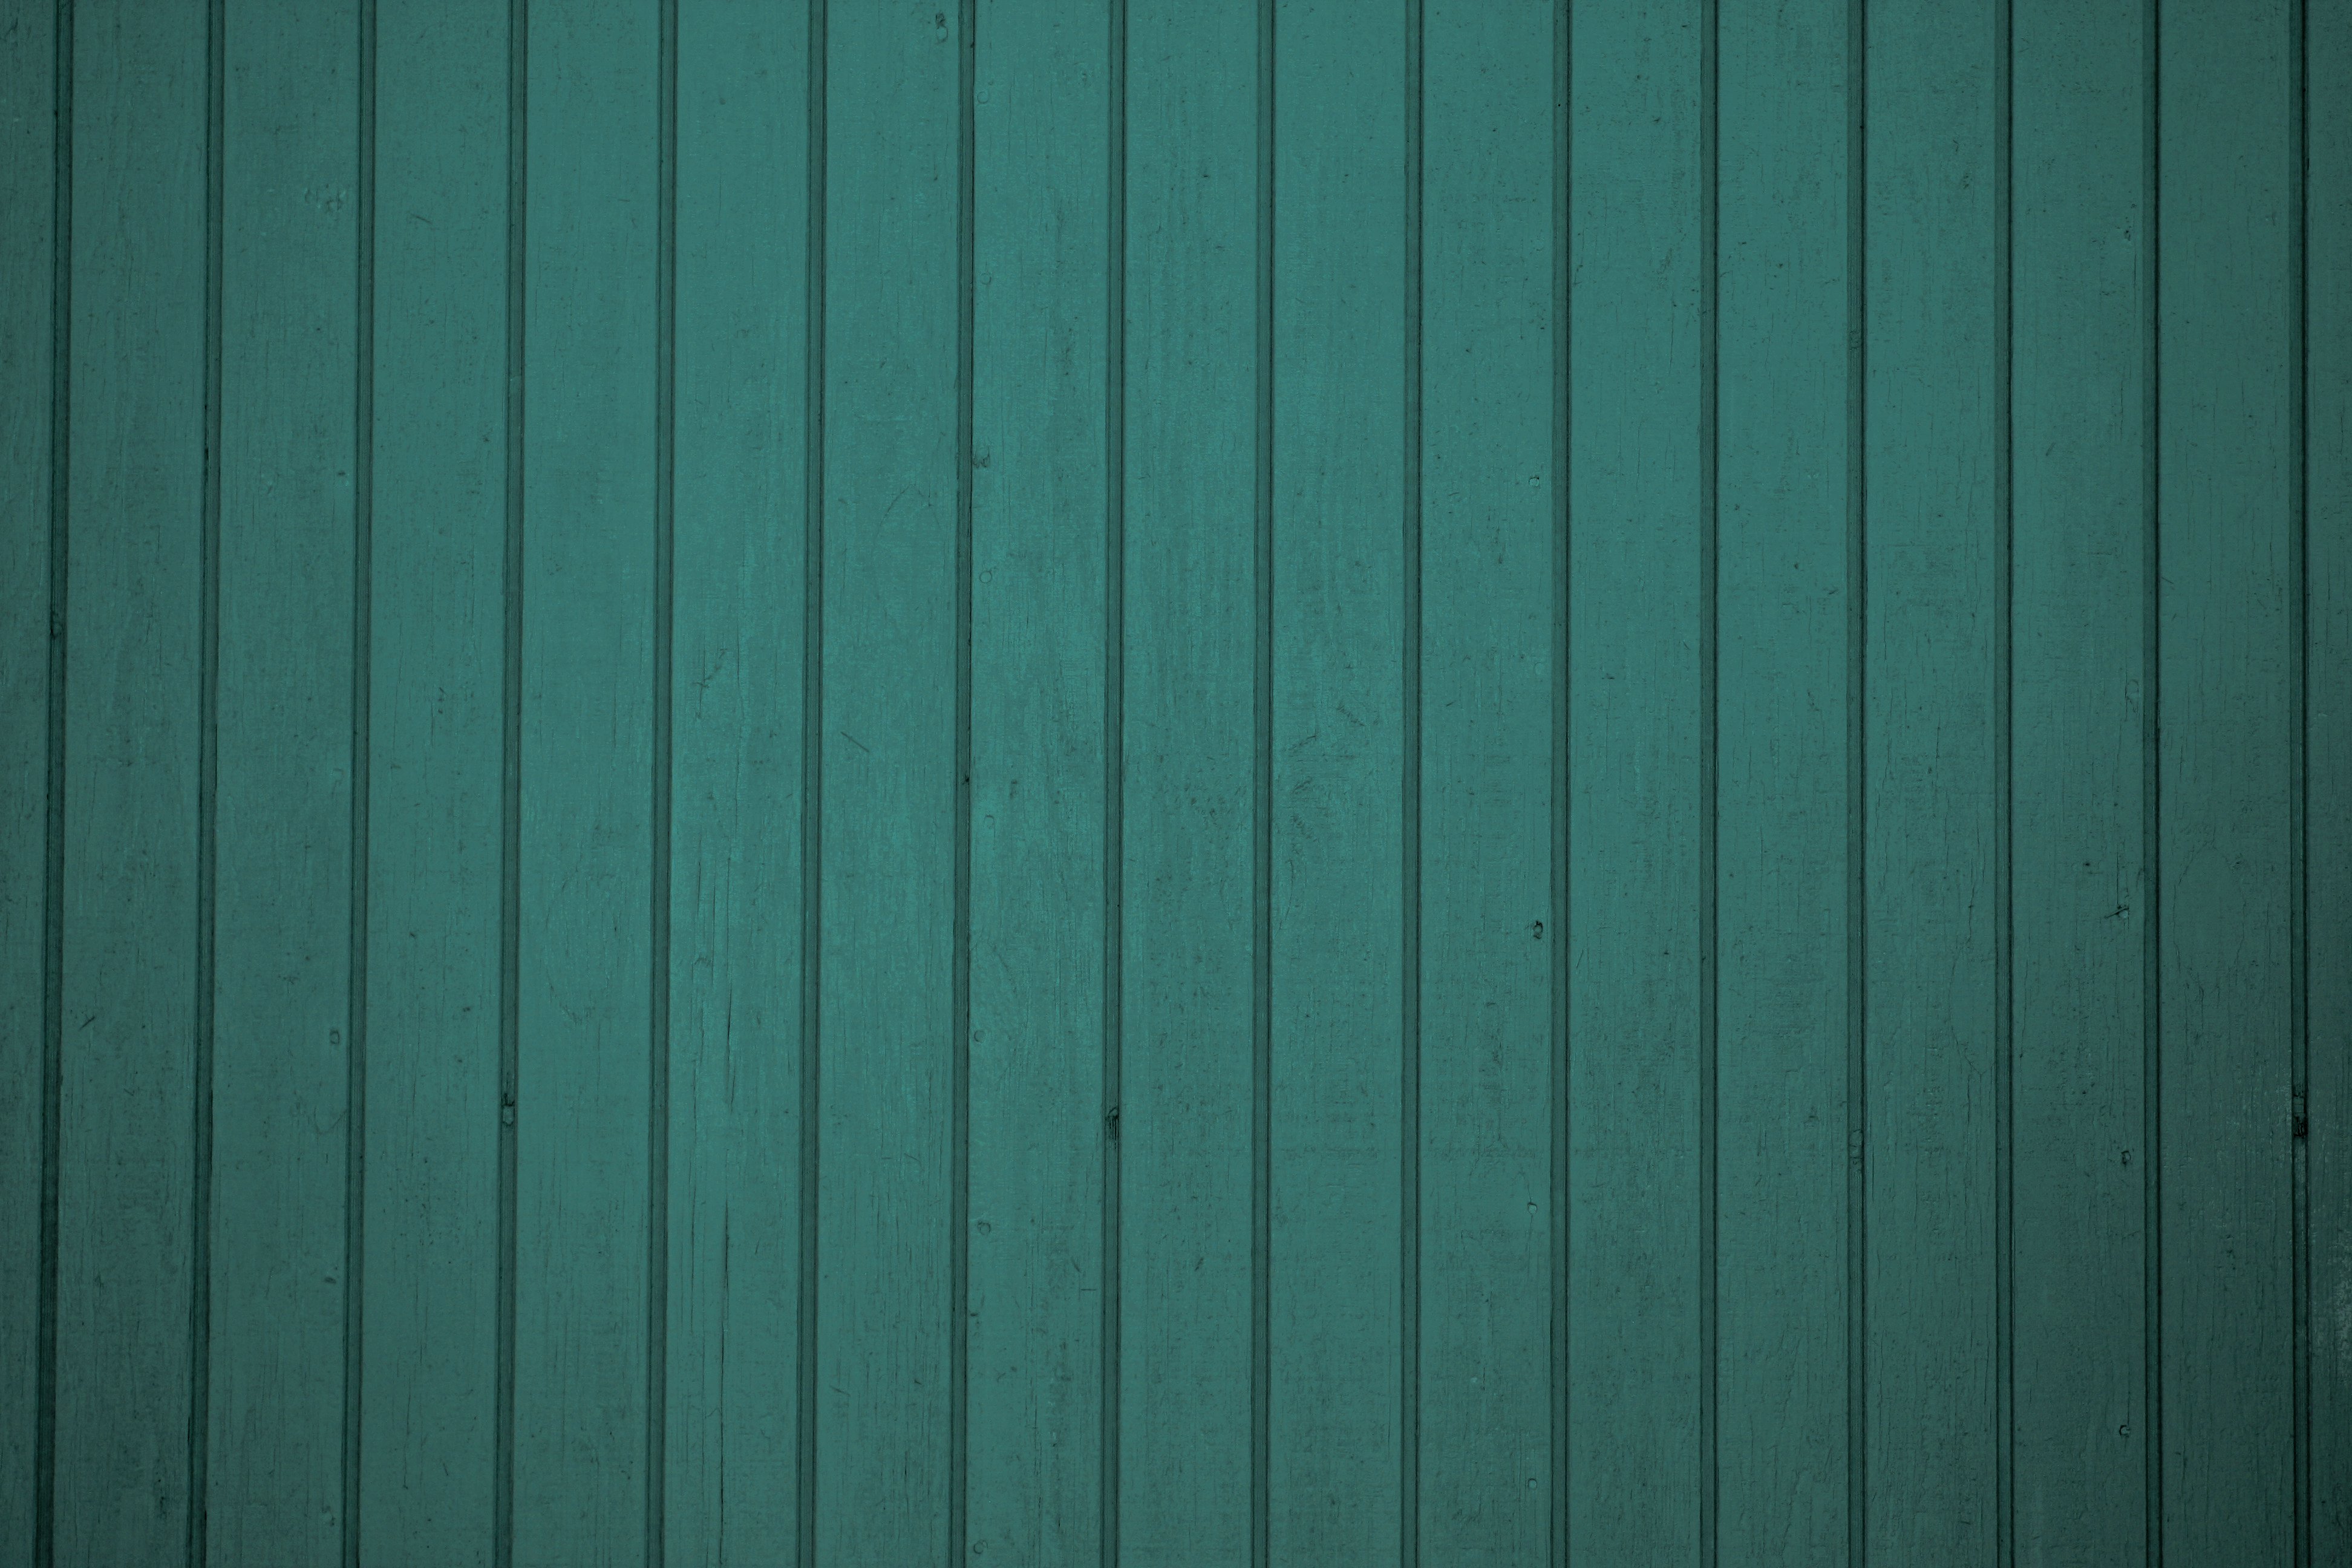 Green Vertical Siding Texture Picture | Free Photograph | Photos Public